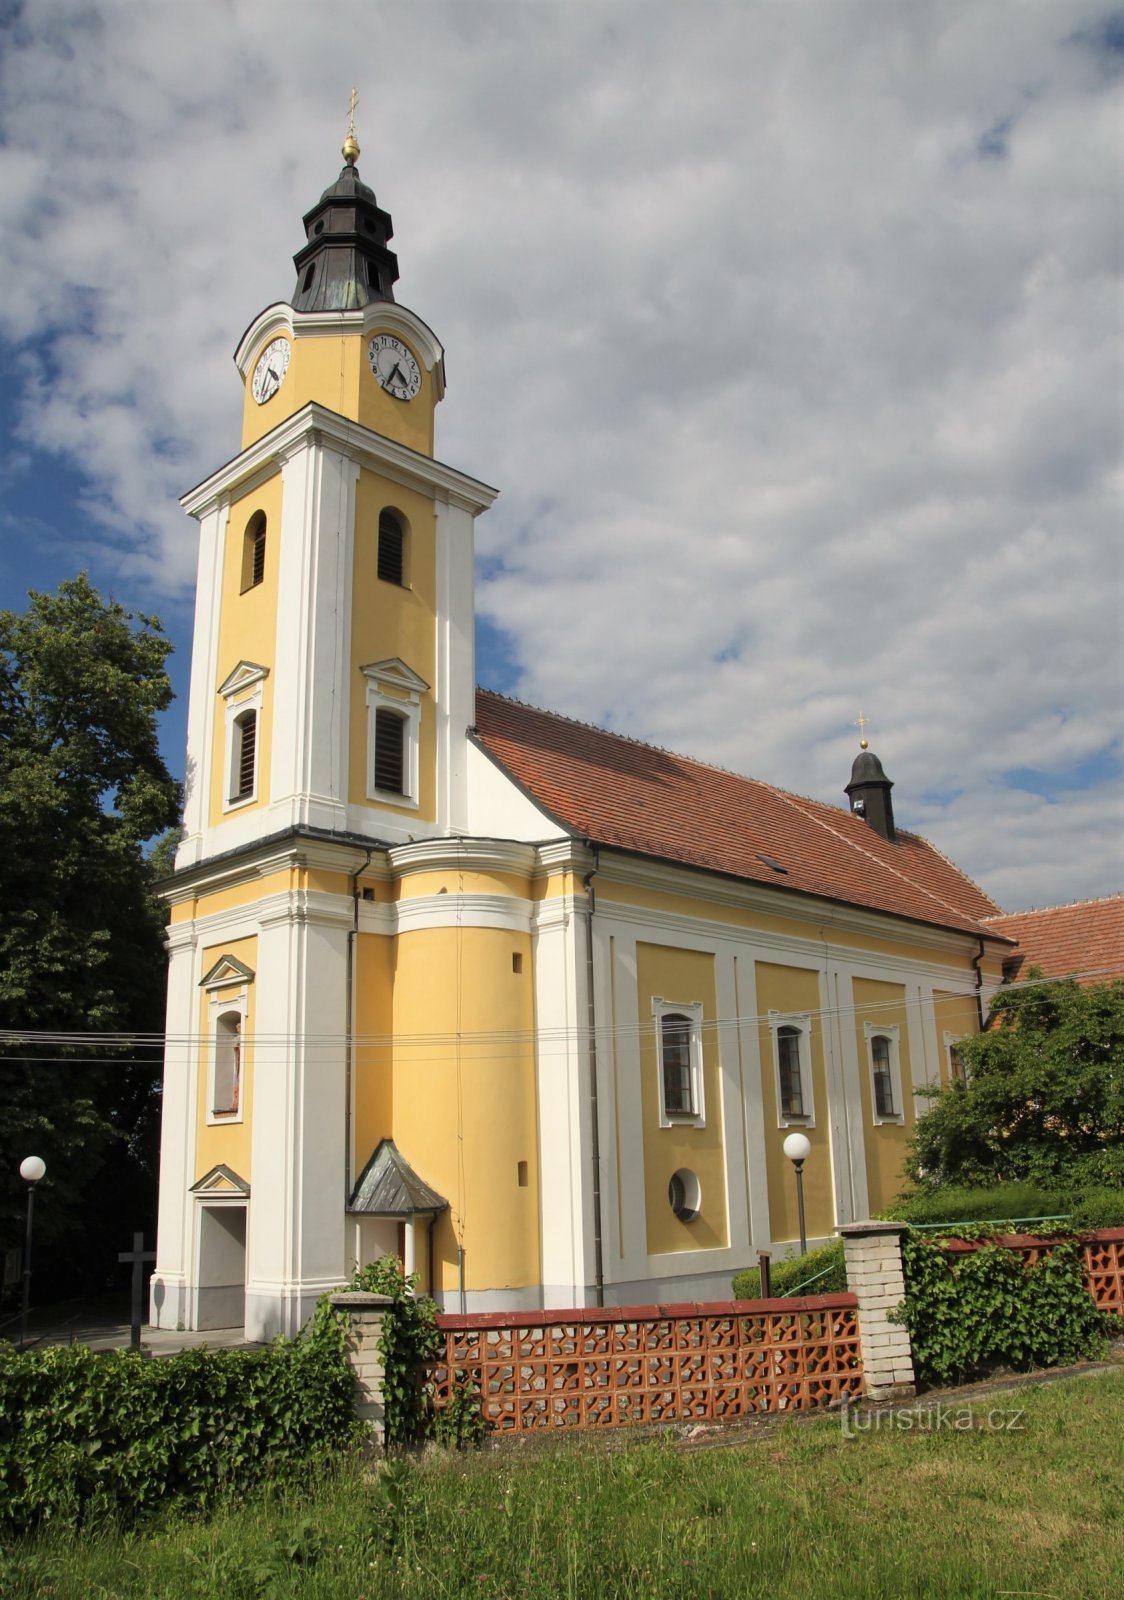 Mutěnice - kerk van St. Catharina